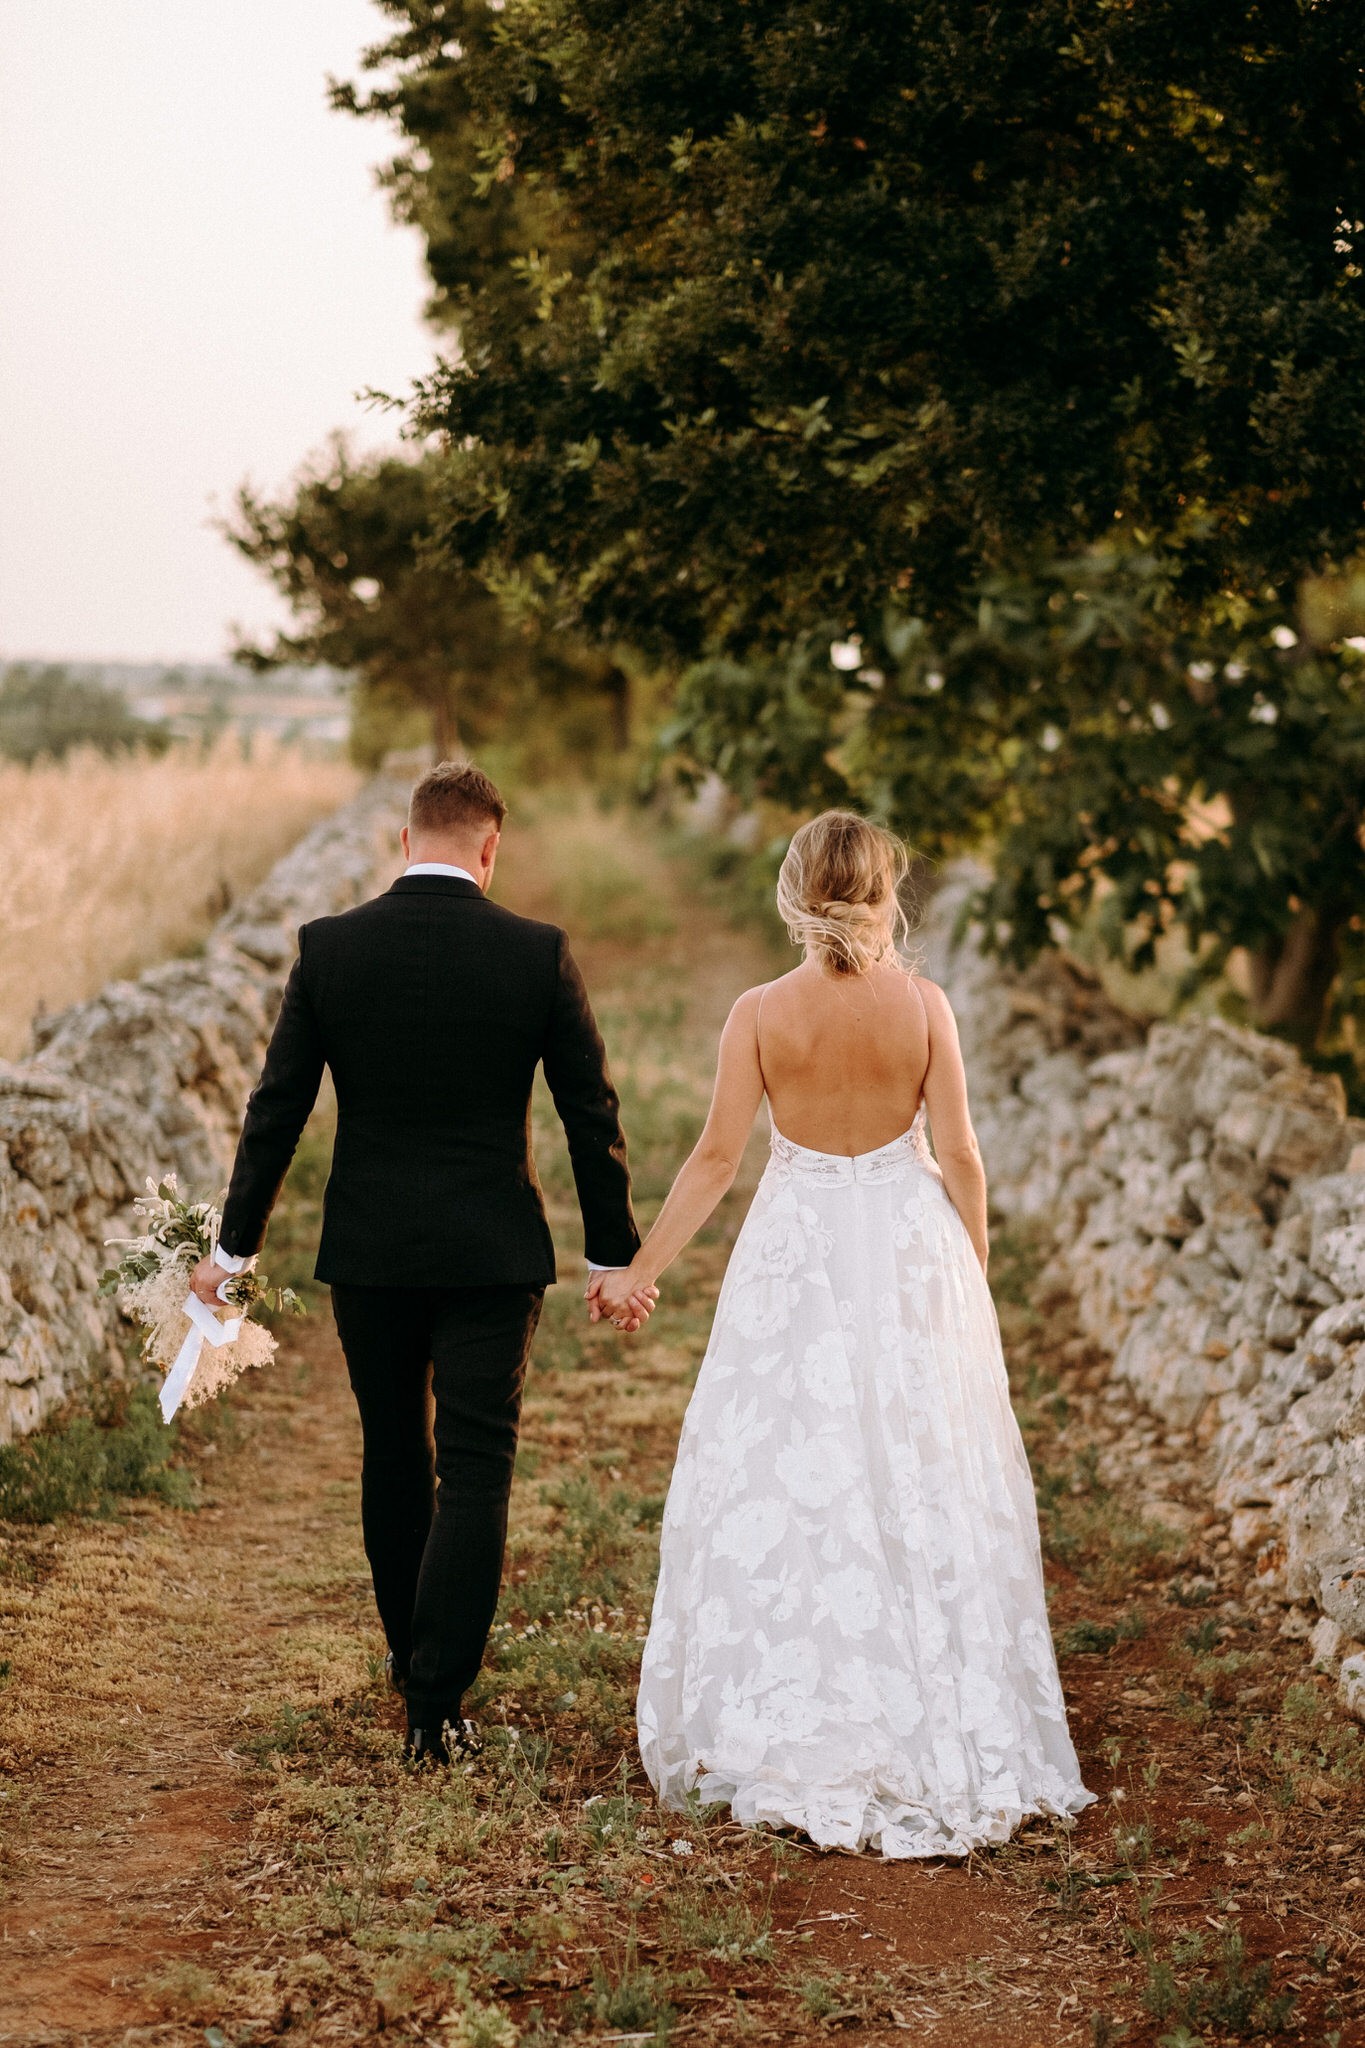 Portratis - Wedding in Apulia, Italy - 35mm